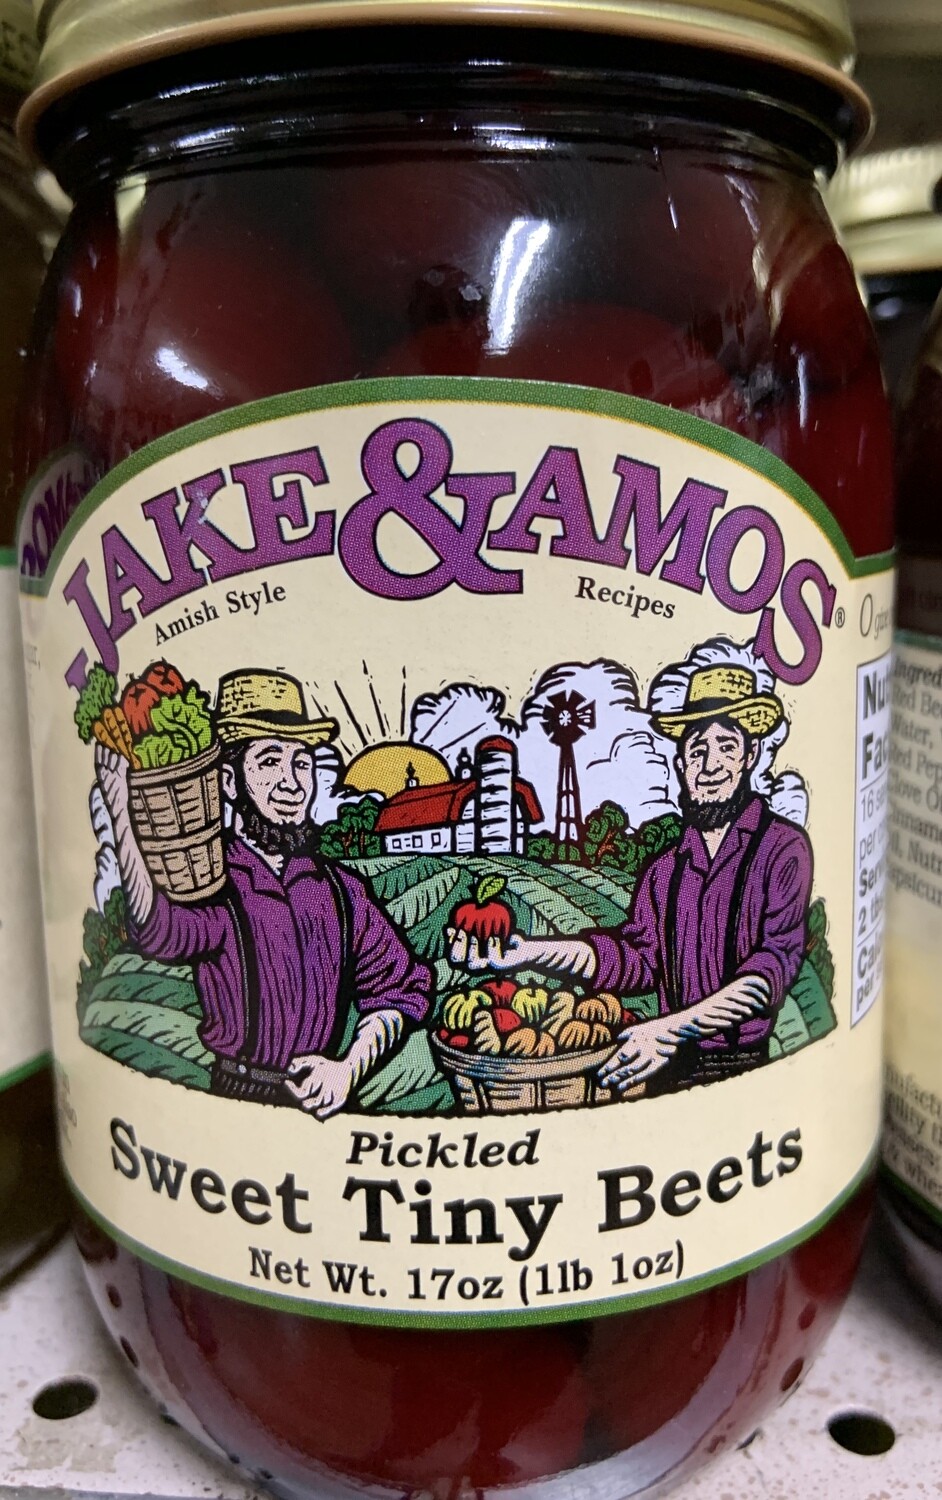 Jake & Amos Pickled Sweet Tiny Beets 16 oz